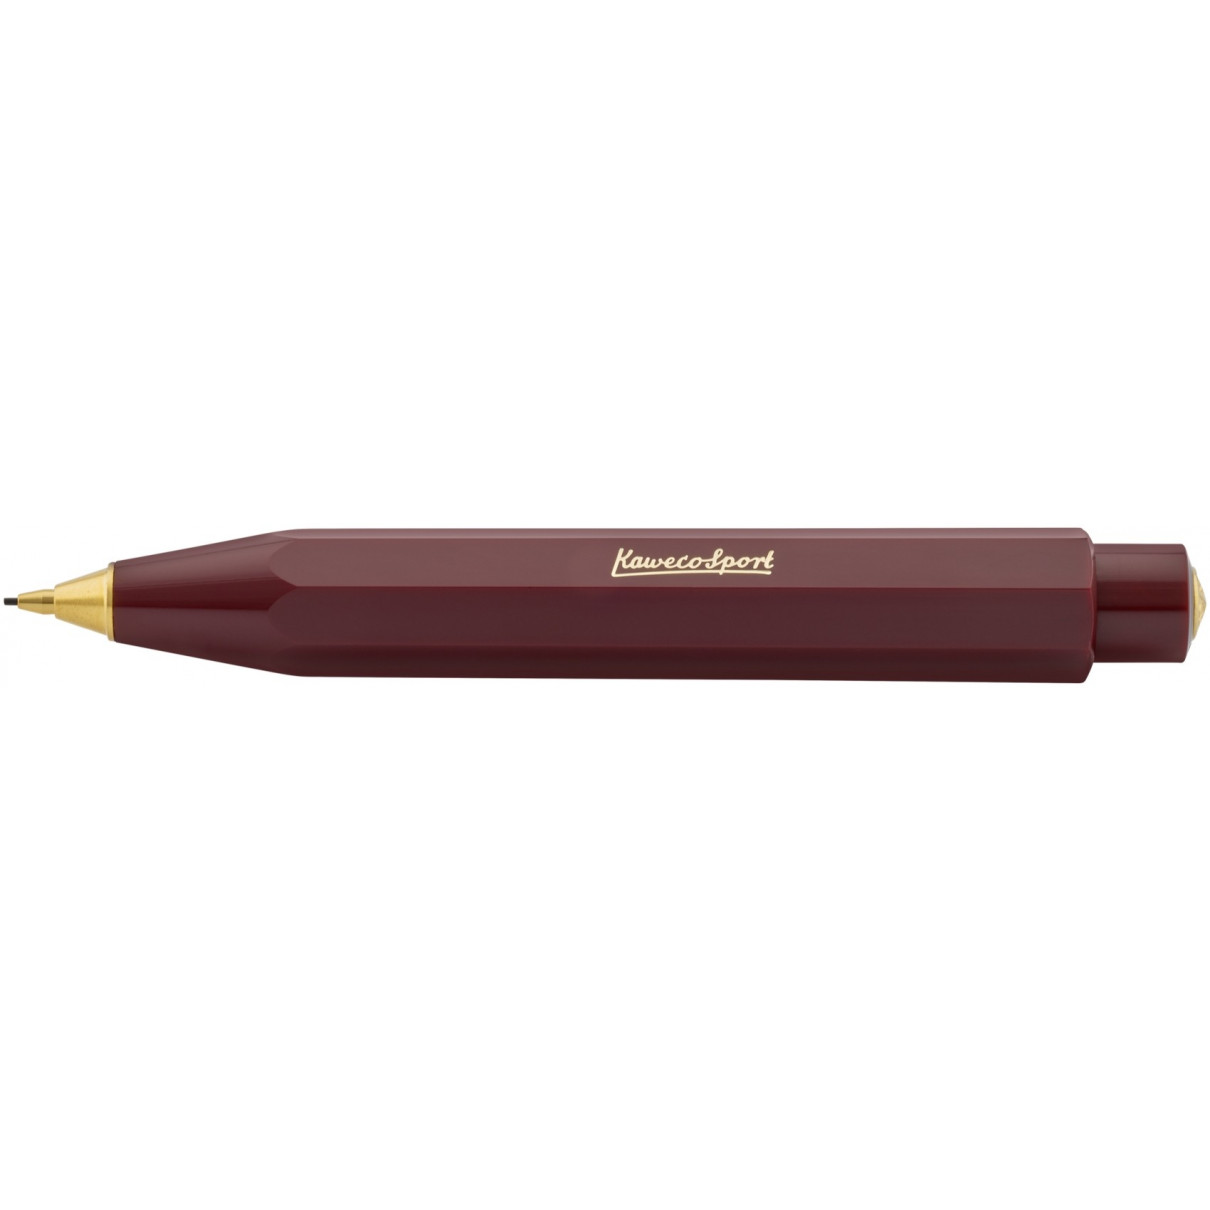 Kaweco Classic Sport Pencil - Bordeaux Red